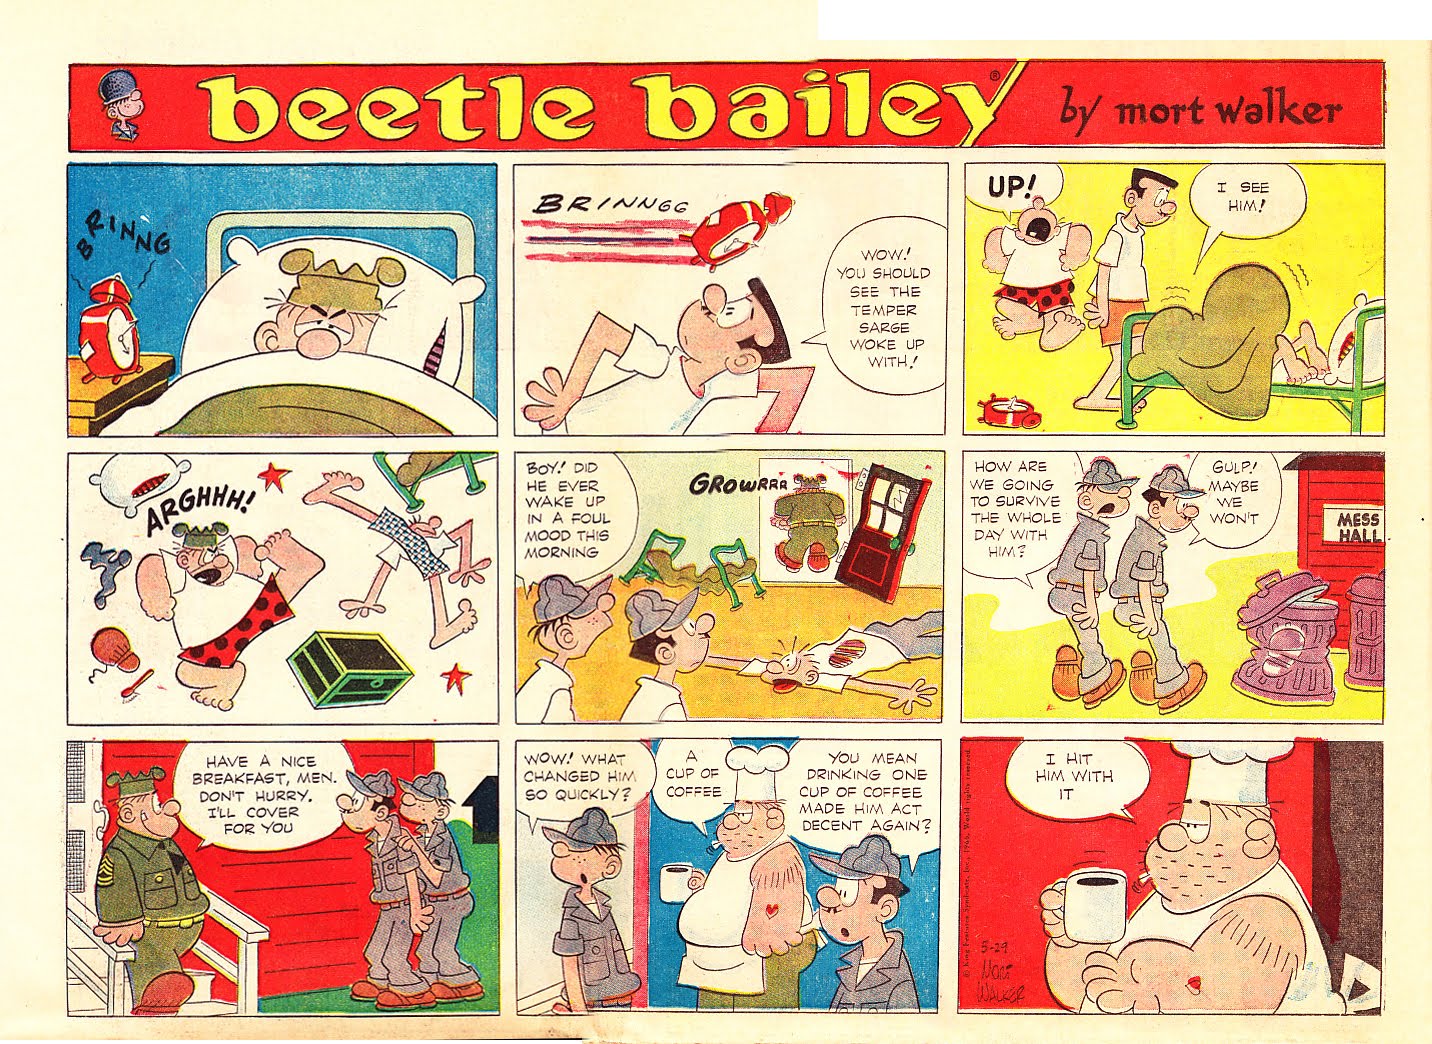 Beetle bailey boob - Adult videos